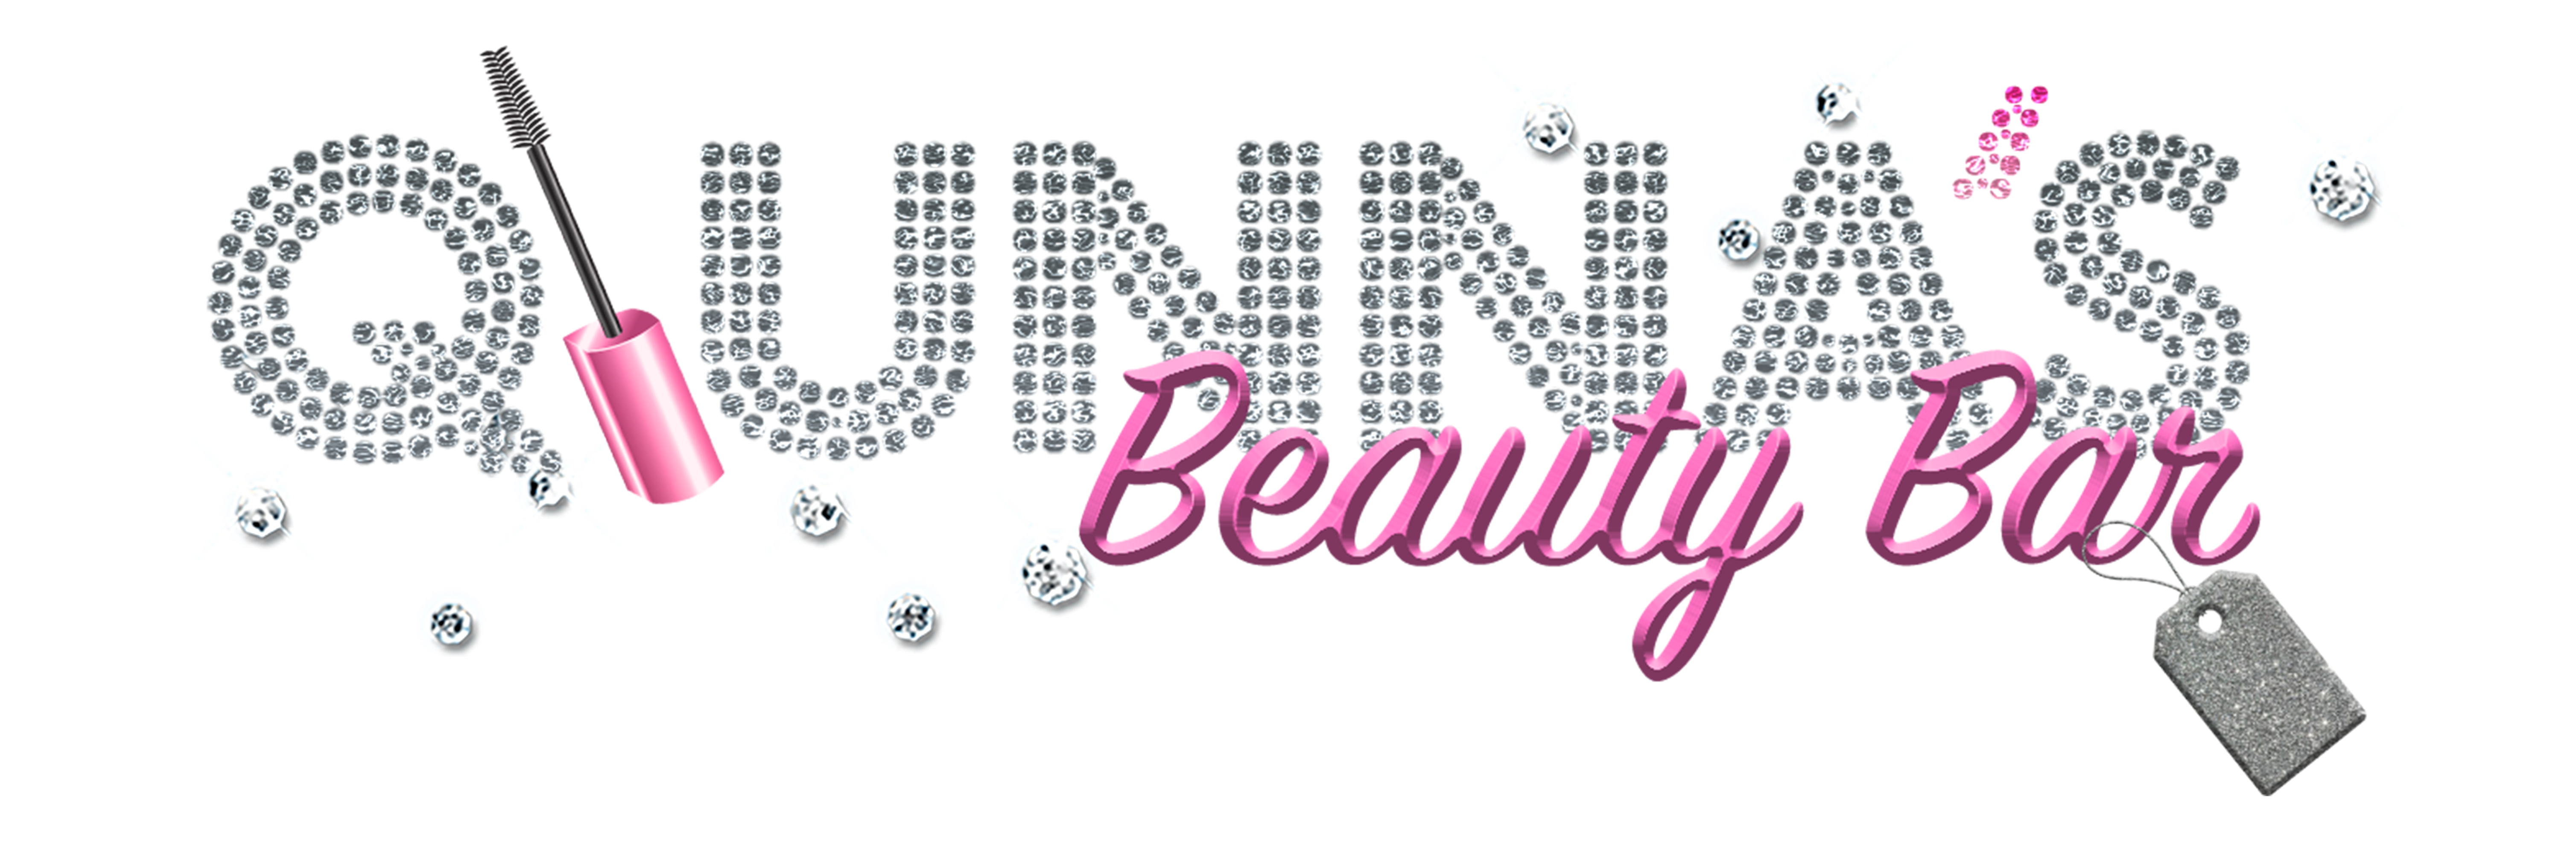 Qiunna’s Beauty Bar